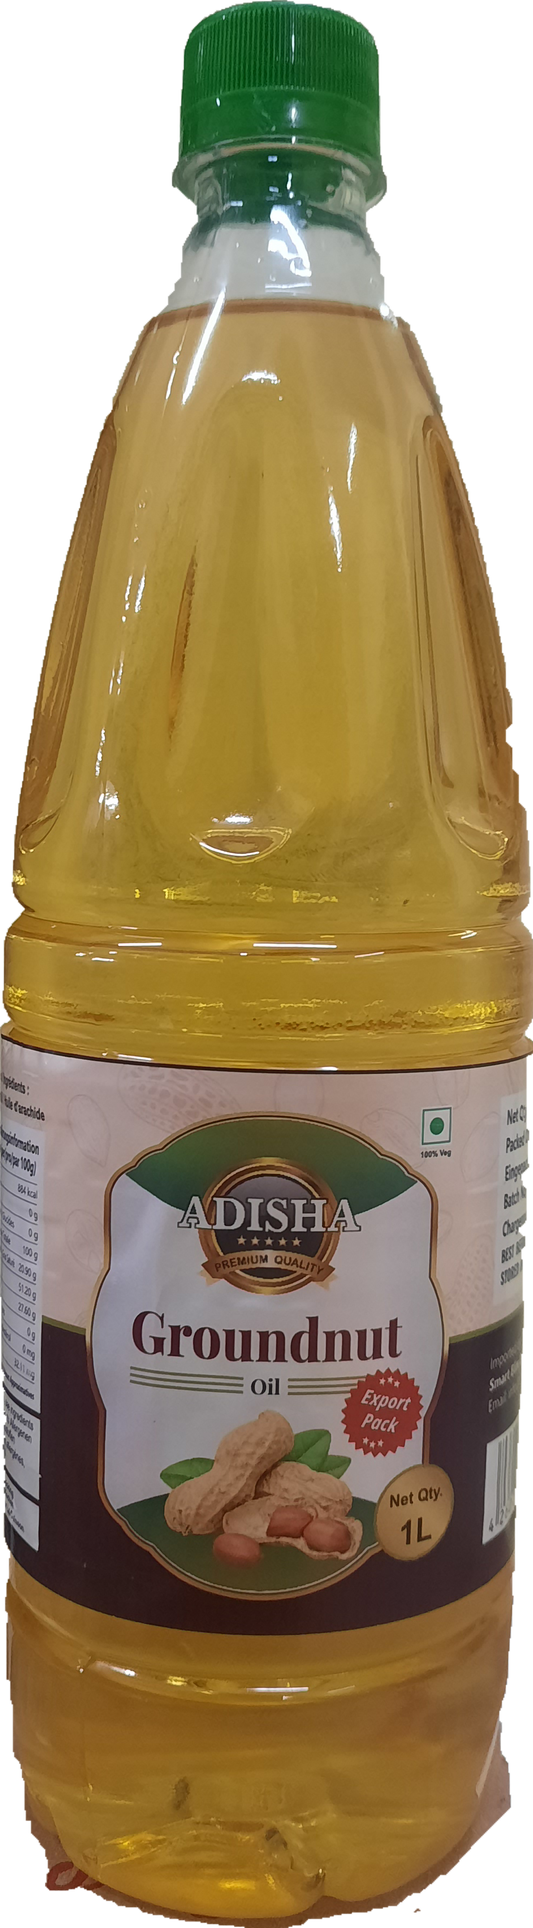 Adisha Groundnut Oil 1L